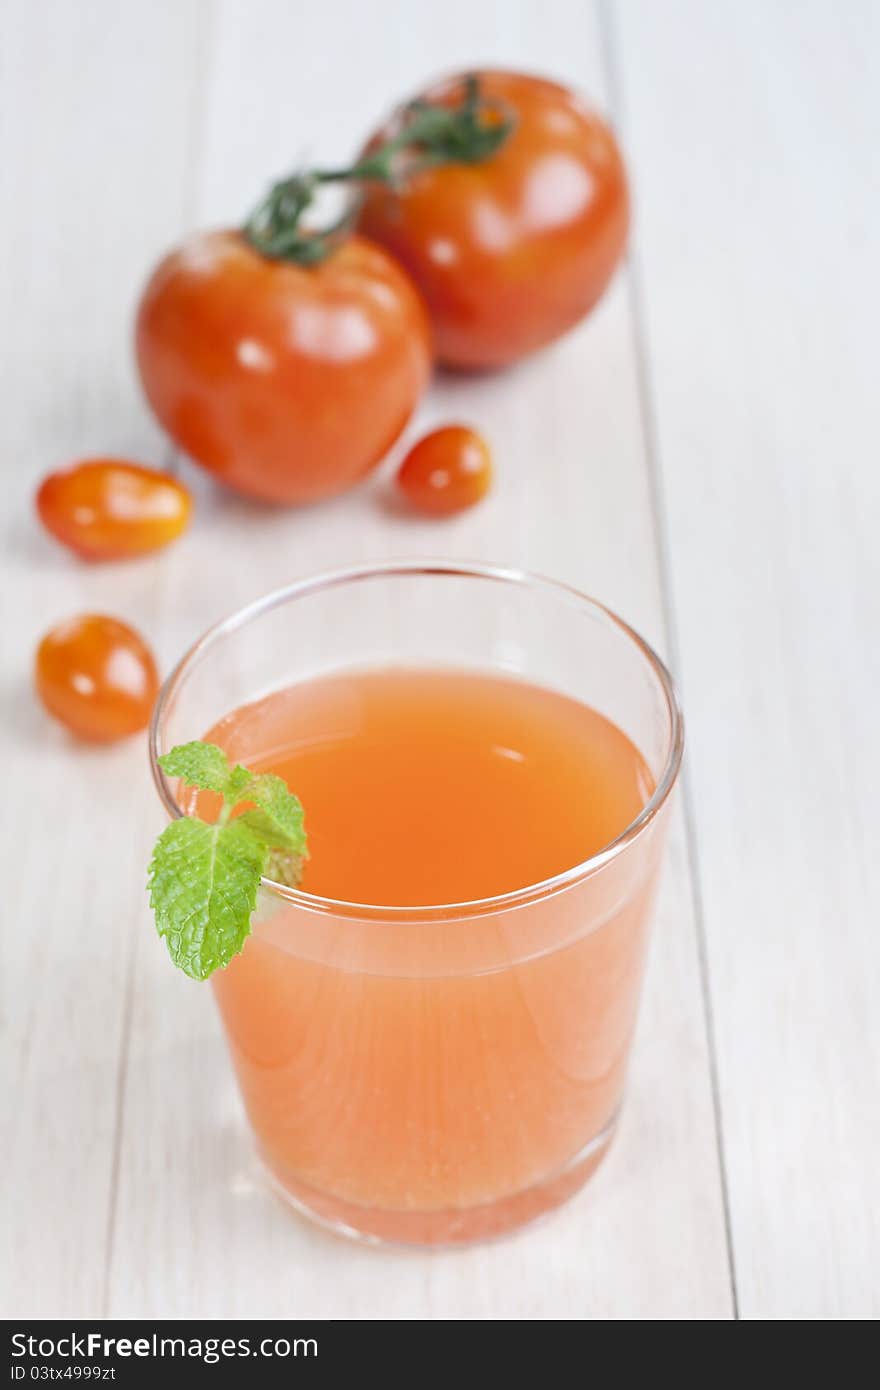 Tomato juice. and glass of tomato juice. Tomato juice. and glass of tomato juice